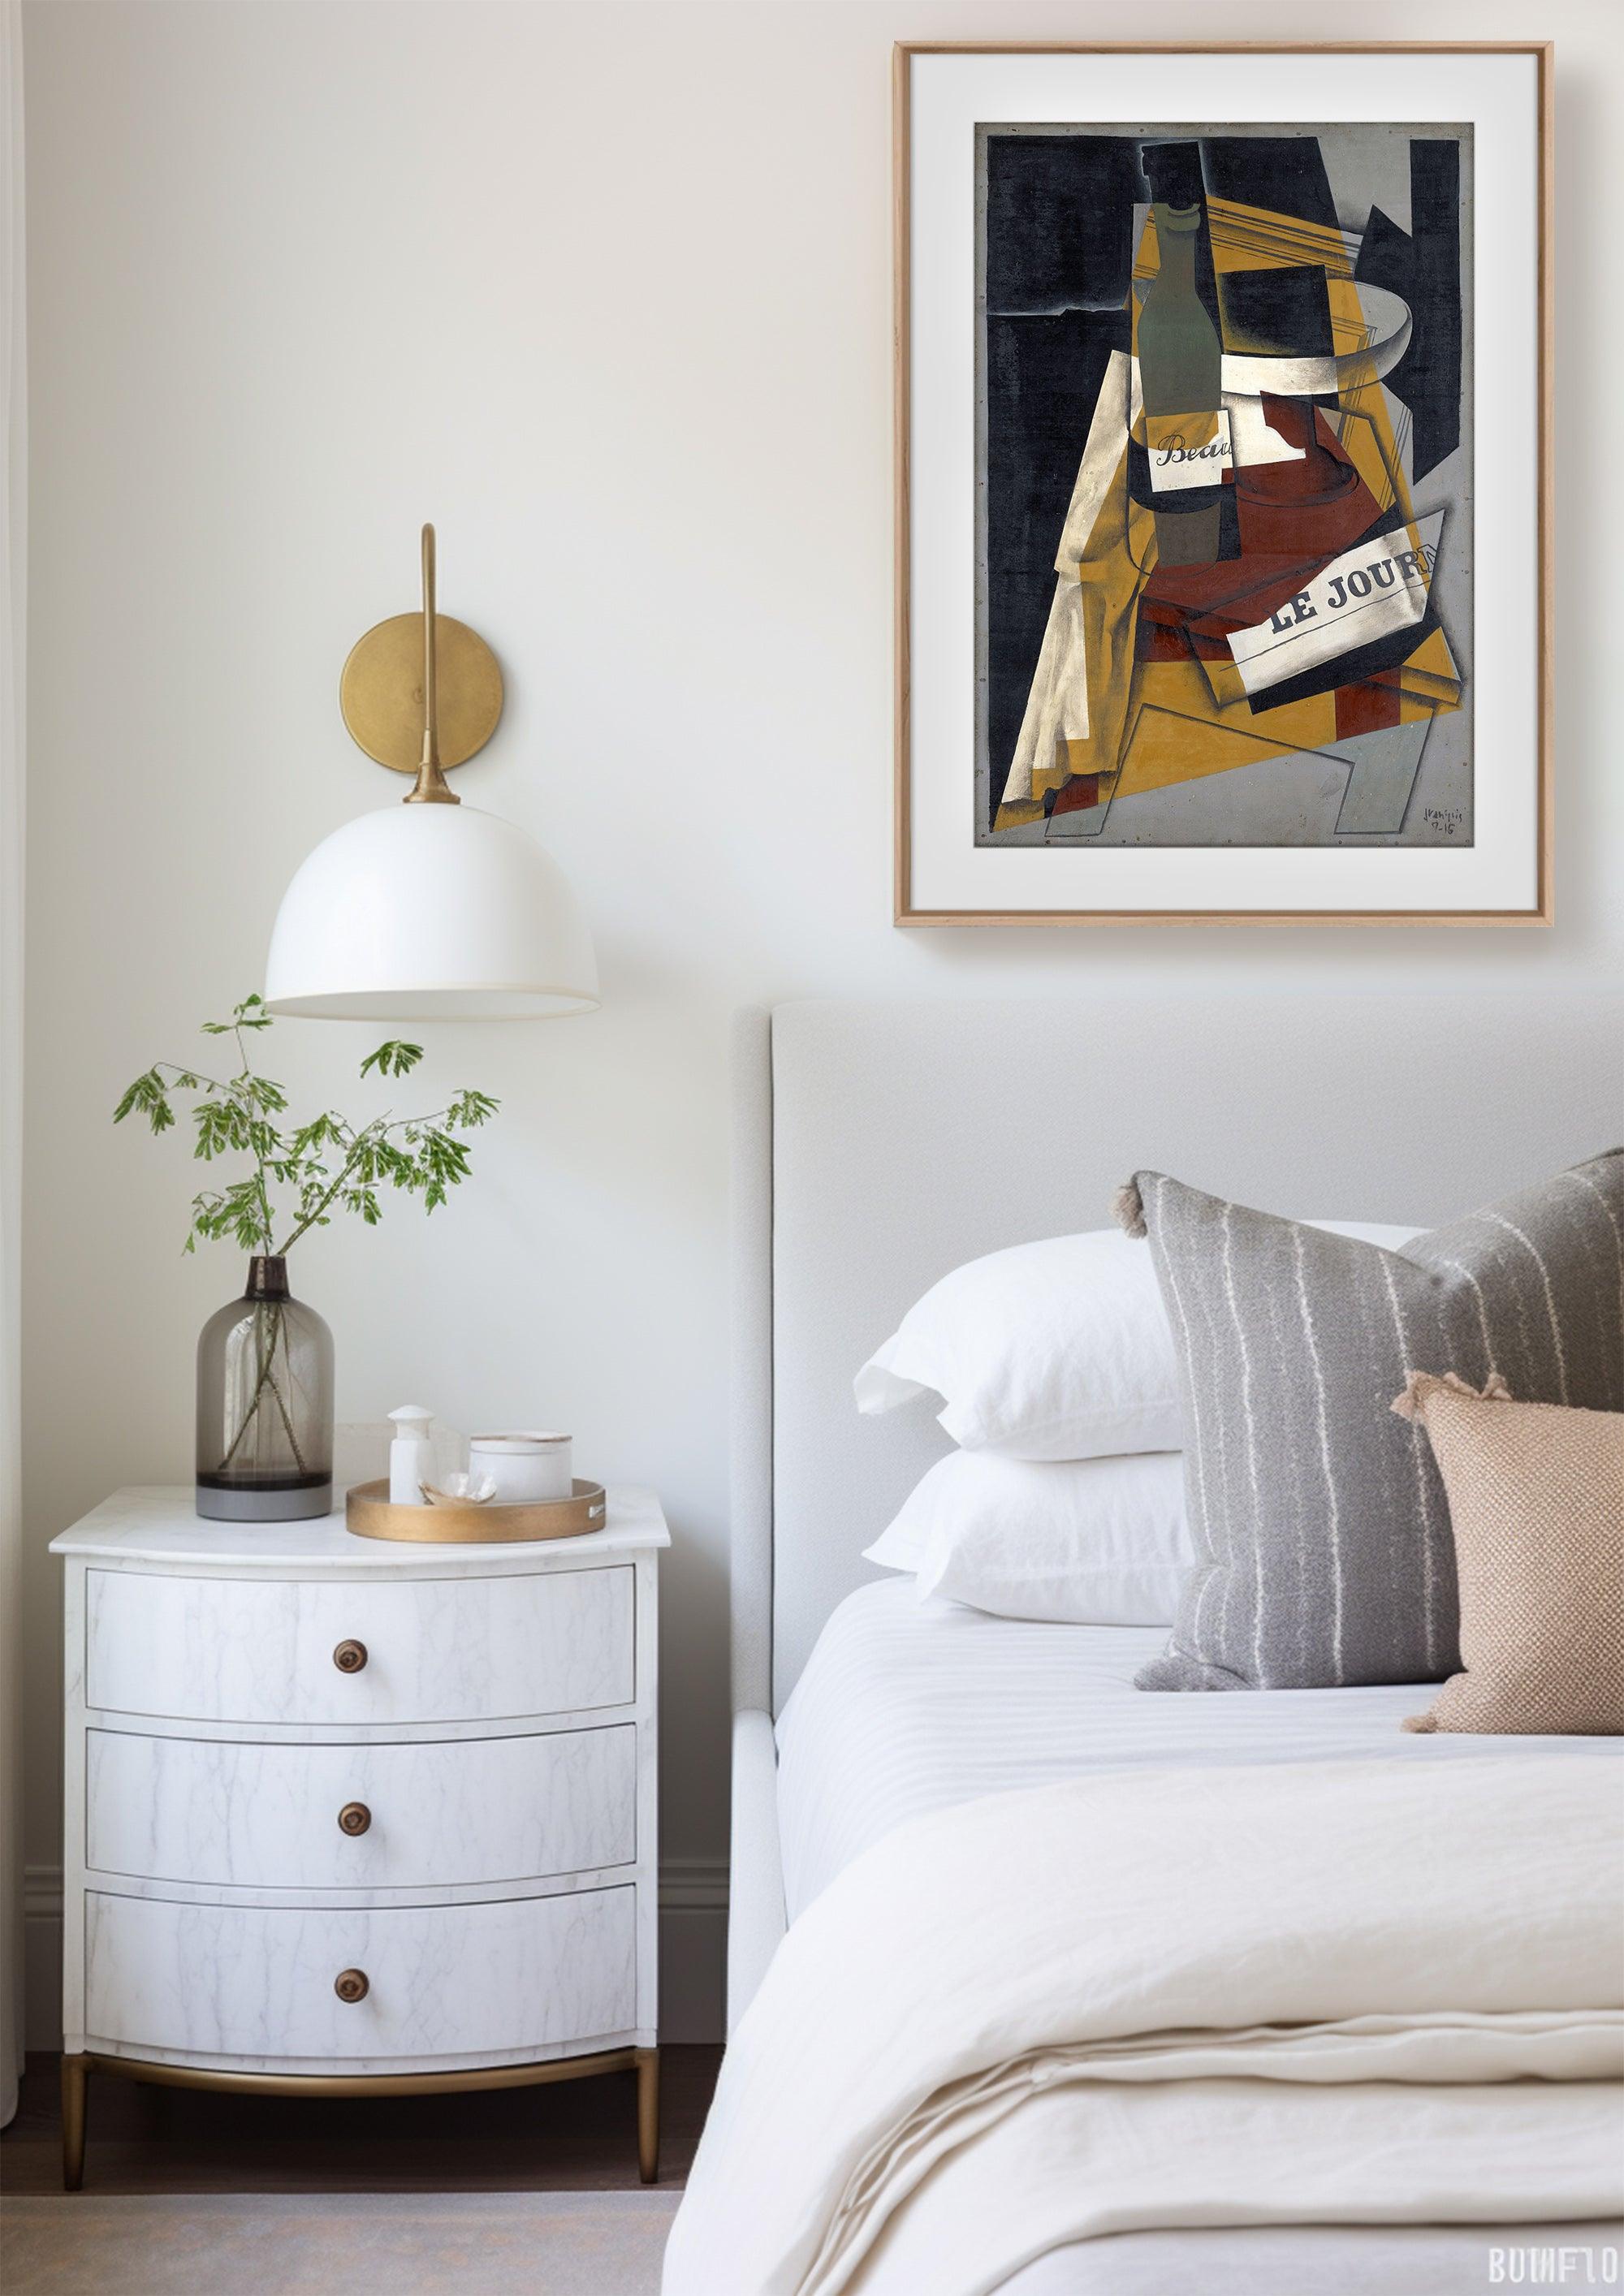 Cubism,Wall Art,Canvas Print,Framed,Home Decor CC 4 - ParfaiteArt